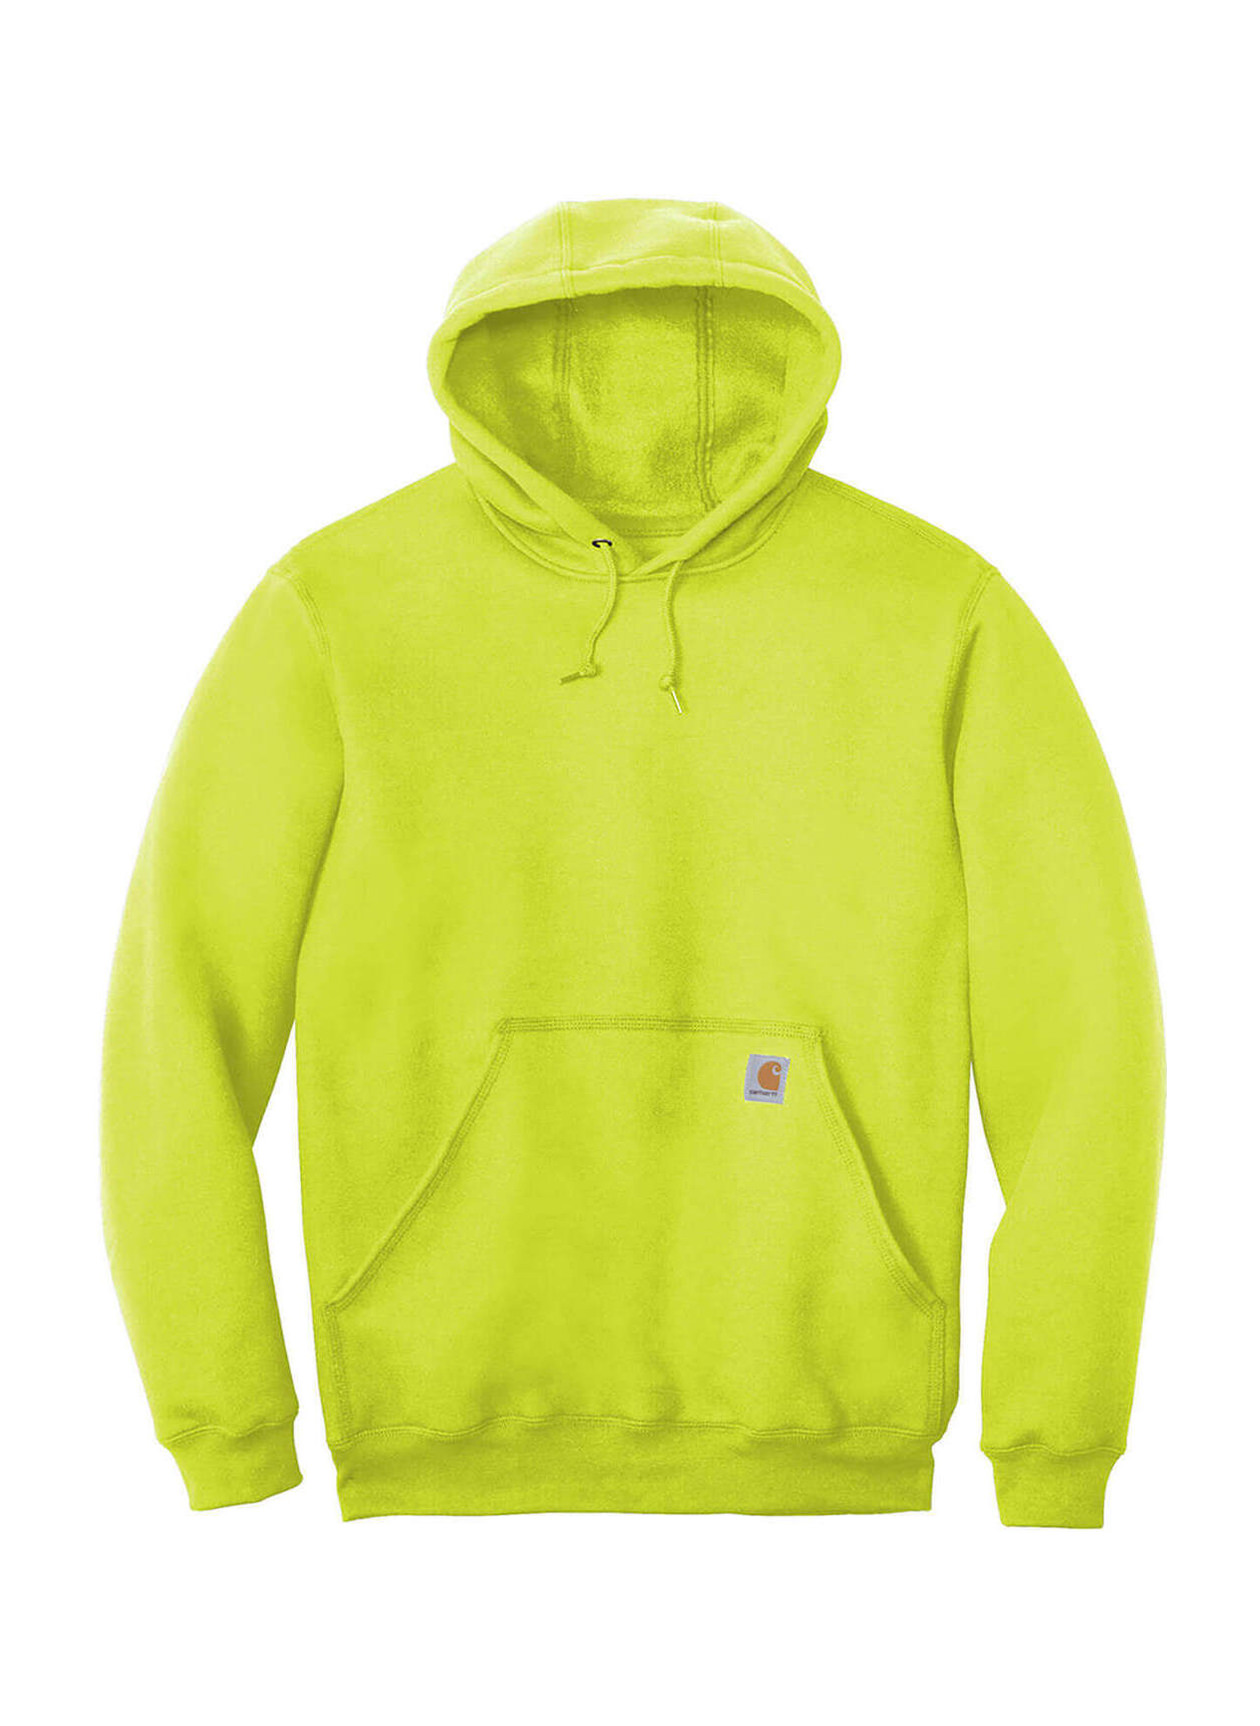 Company Hoodies | Carhartt Men's Brite Lime Midweight Hooded Sweatshirt